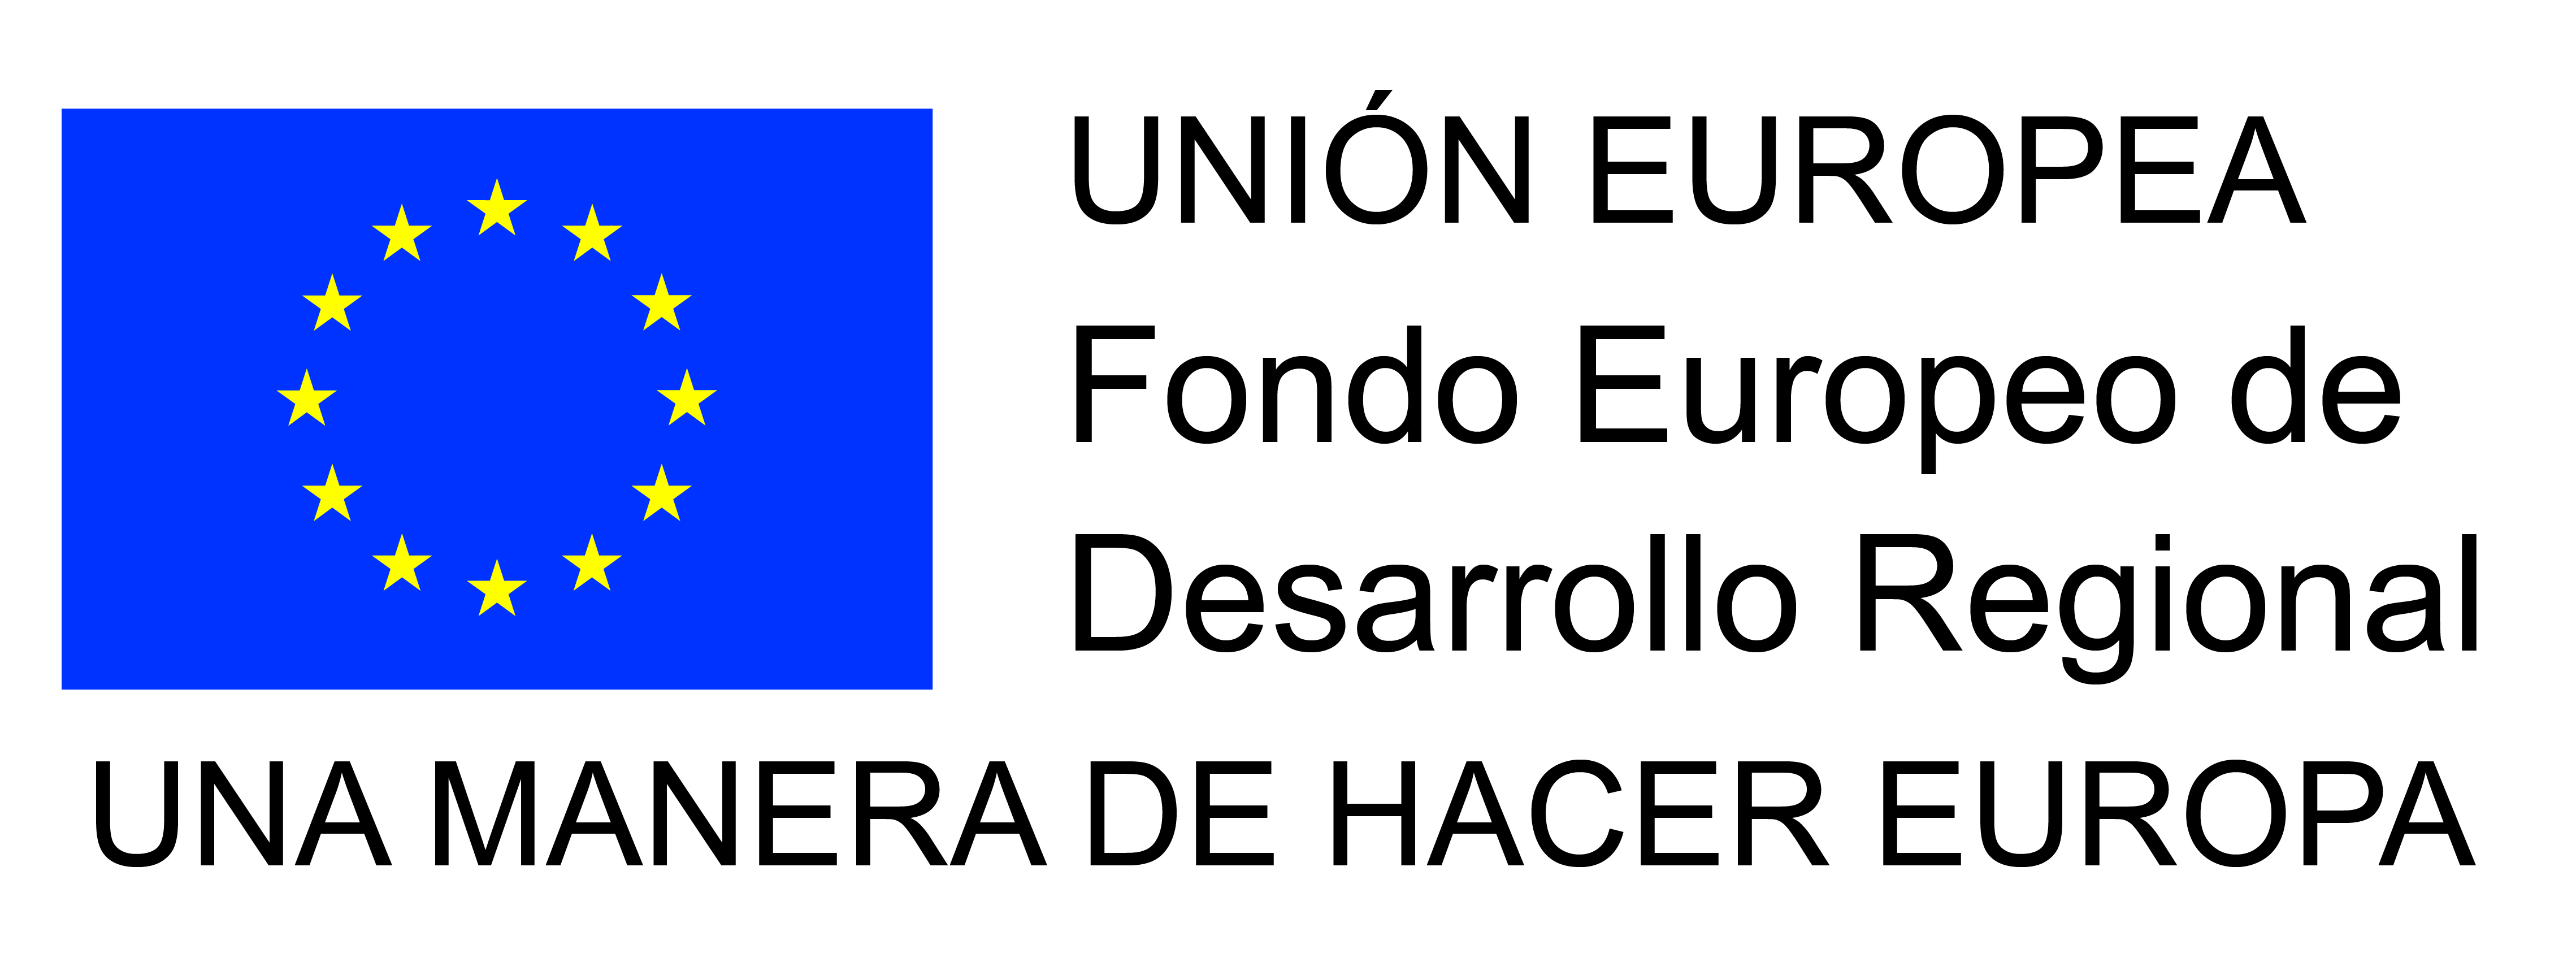 LOGO FONDO EUROPEO DE DESARROLLO REGIONAL